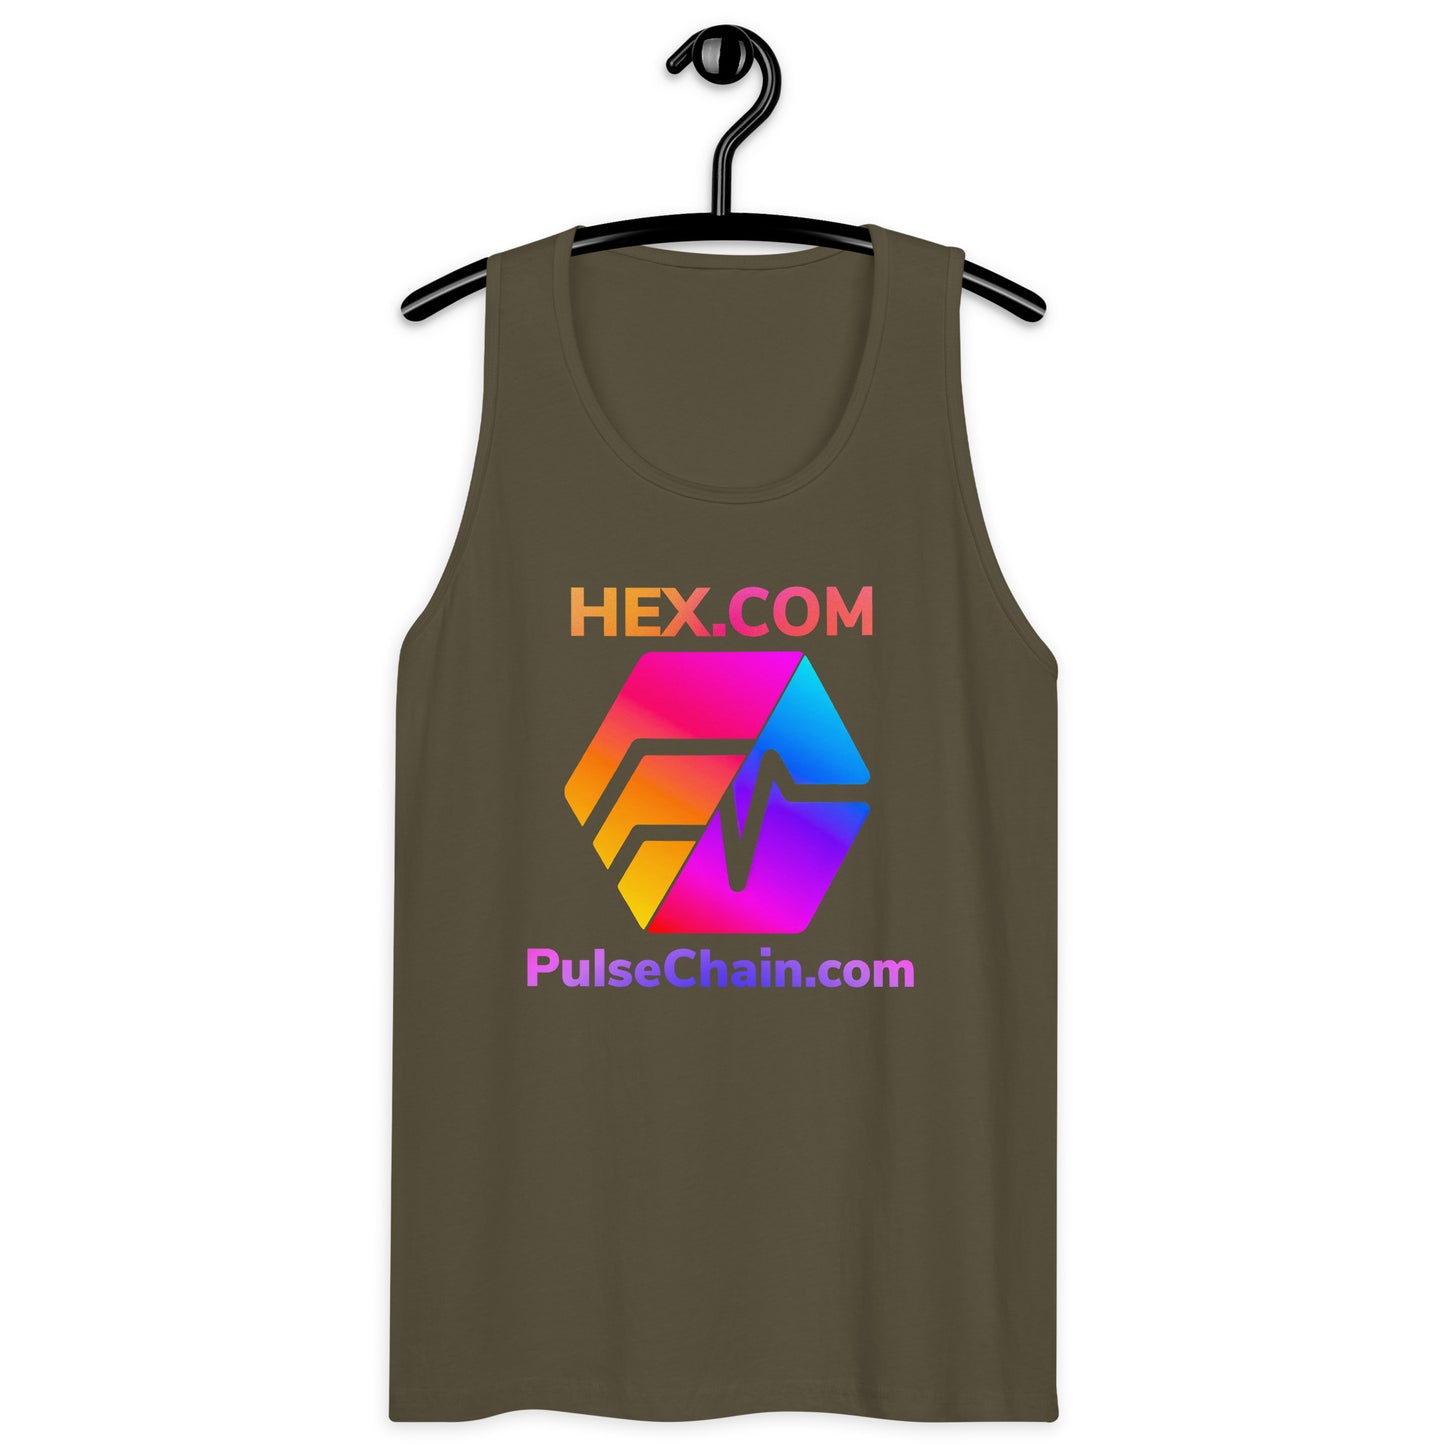 HEX.COM/PulseChain.com Men’s Premium Tank Top